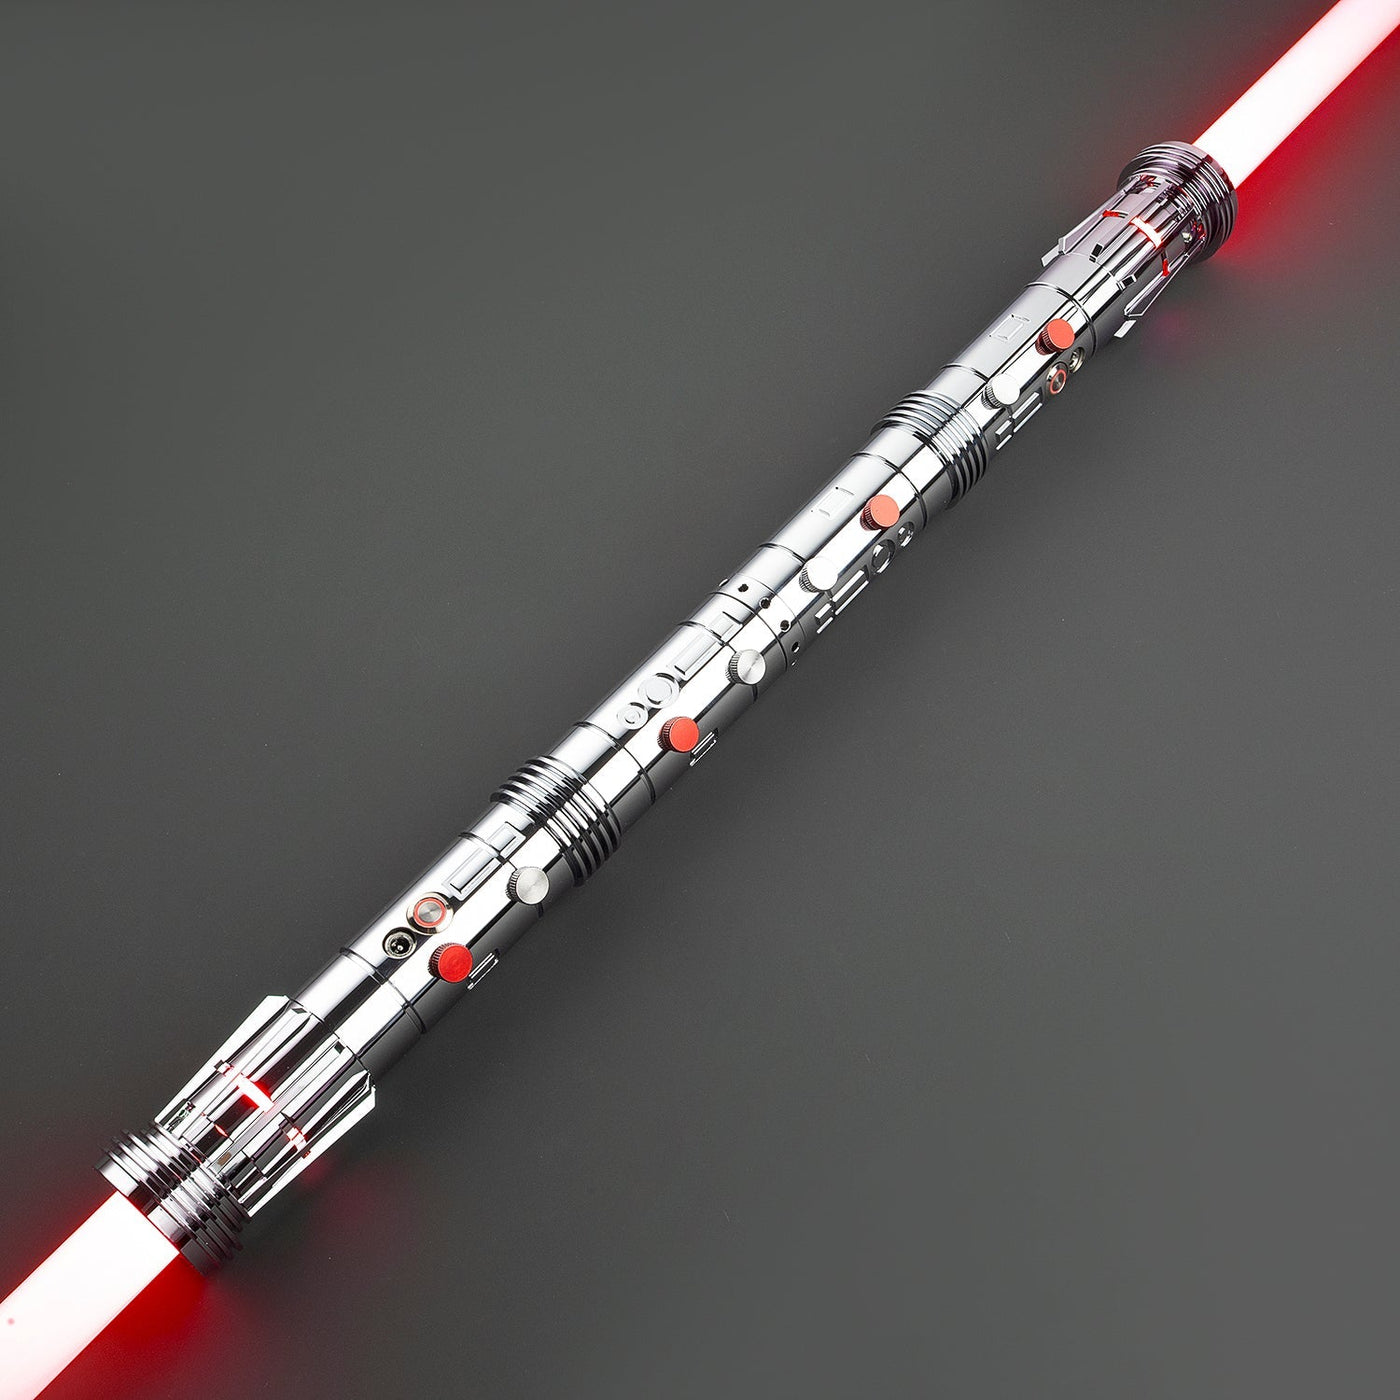 Saberstaff Zilver - KenJo Sabers - Star Wars Lightsaber replica Jedi Sith - Best sabershop Europe - Nederland light sabers kopen -